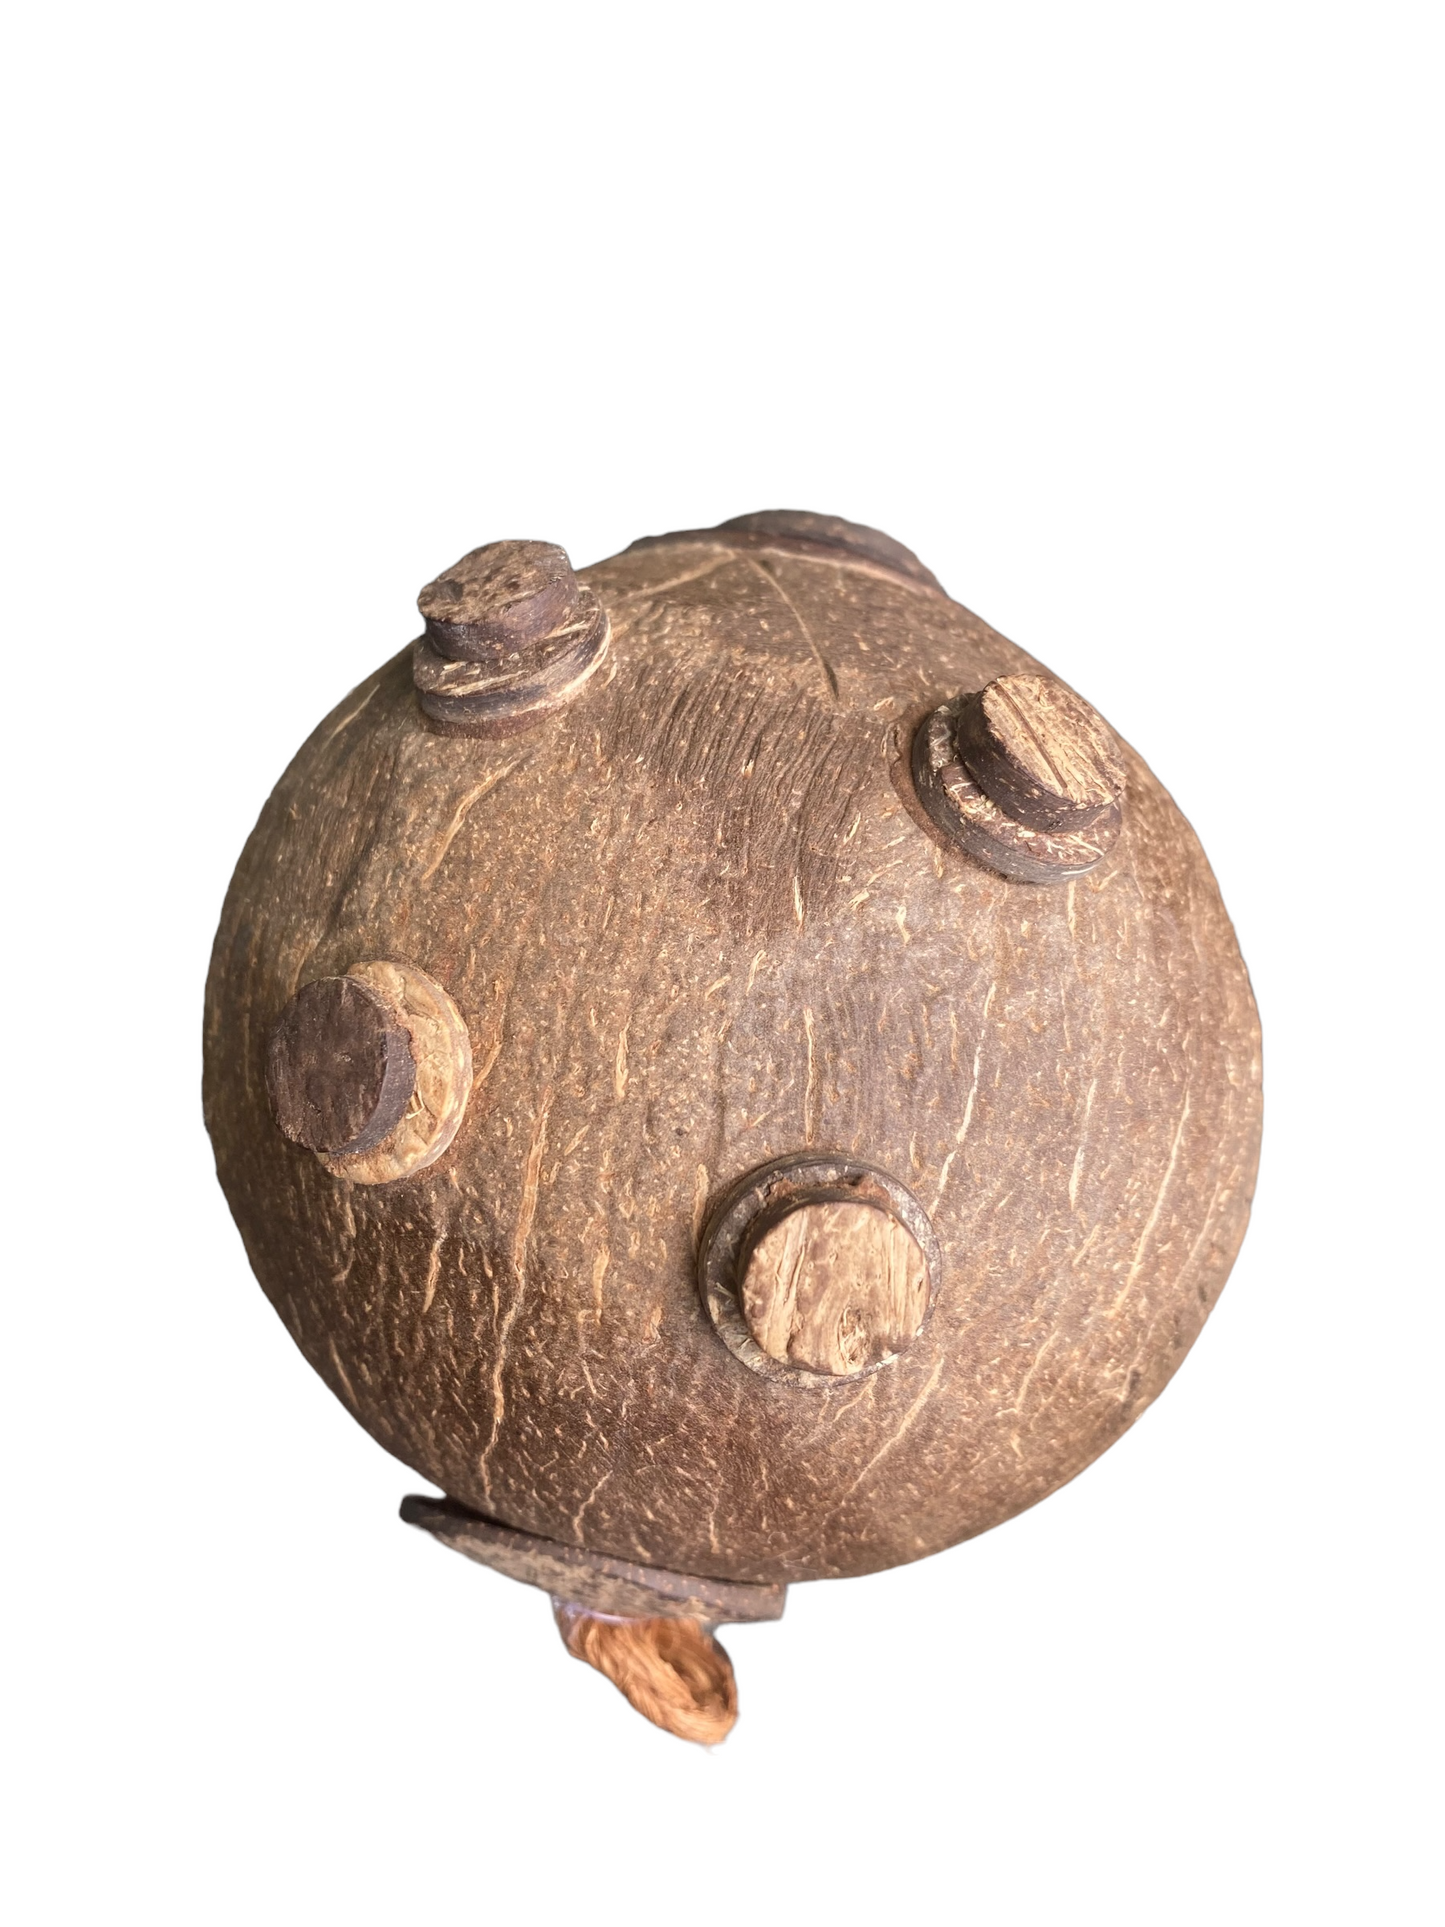 Coconut shell Piggy bank